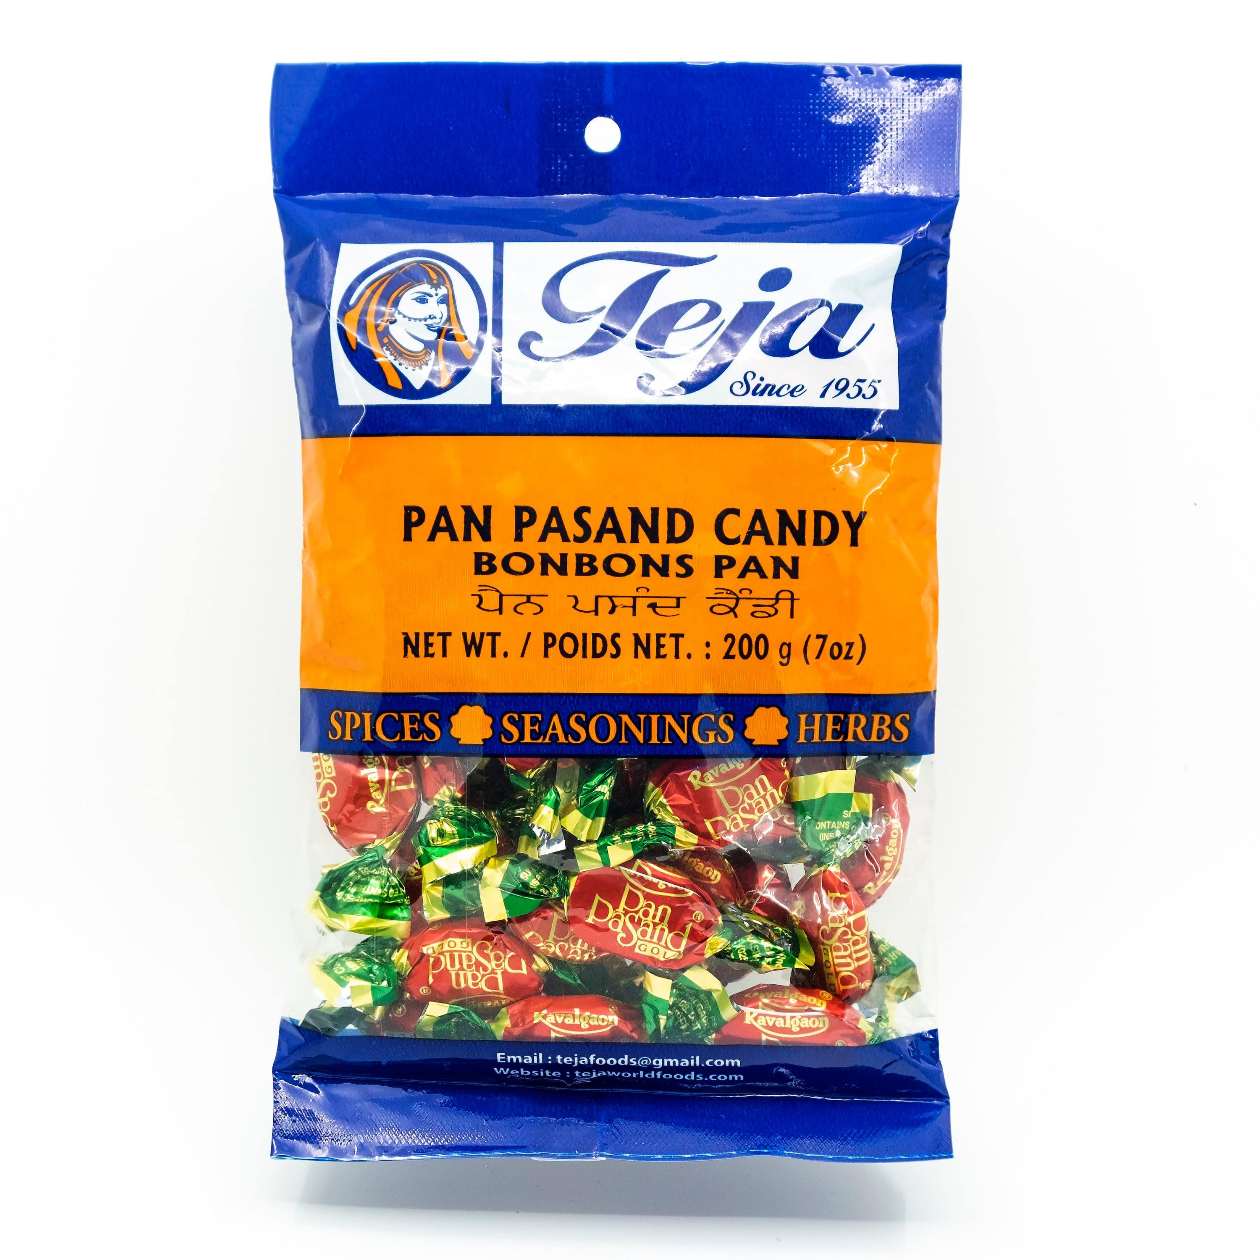 https://www.tejaworldfoods.com/wp-content/uploads/2021/08/Pan-Pasand-Candy-min.jpeg